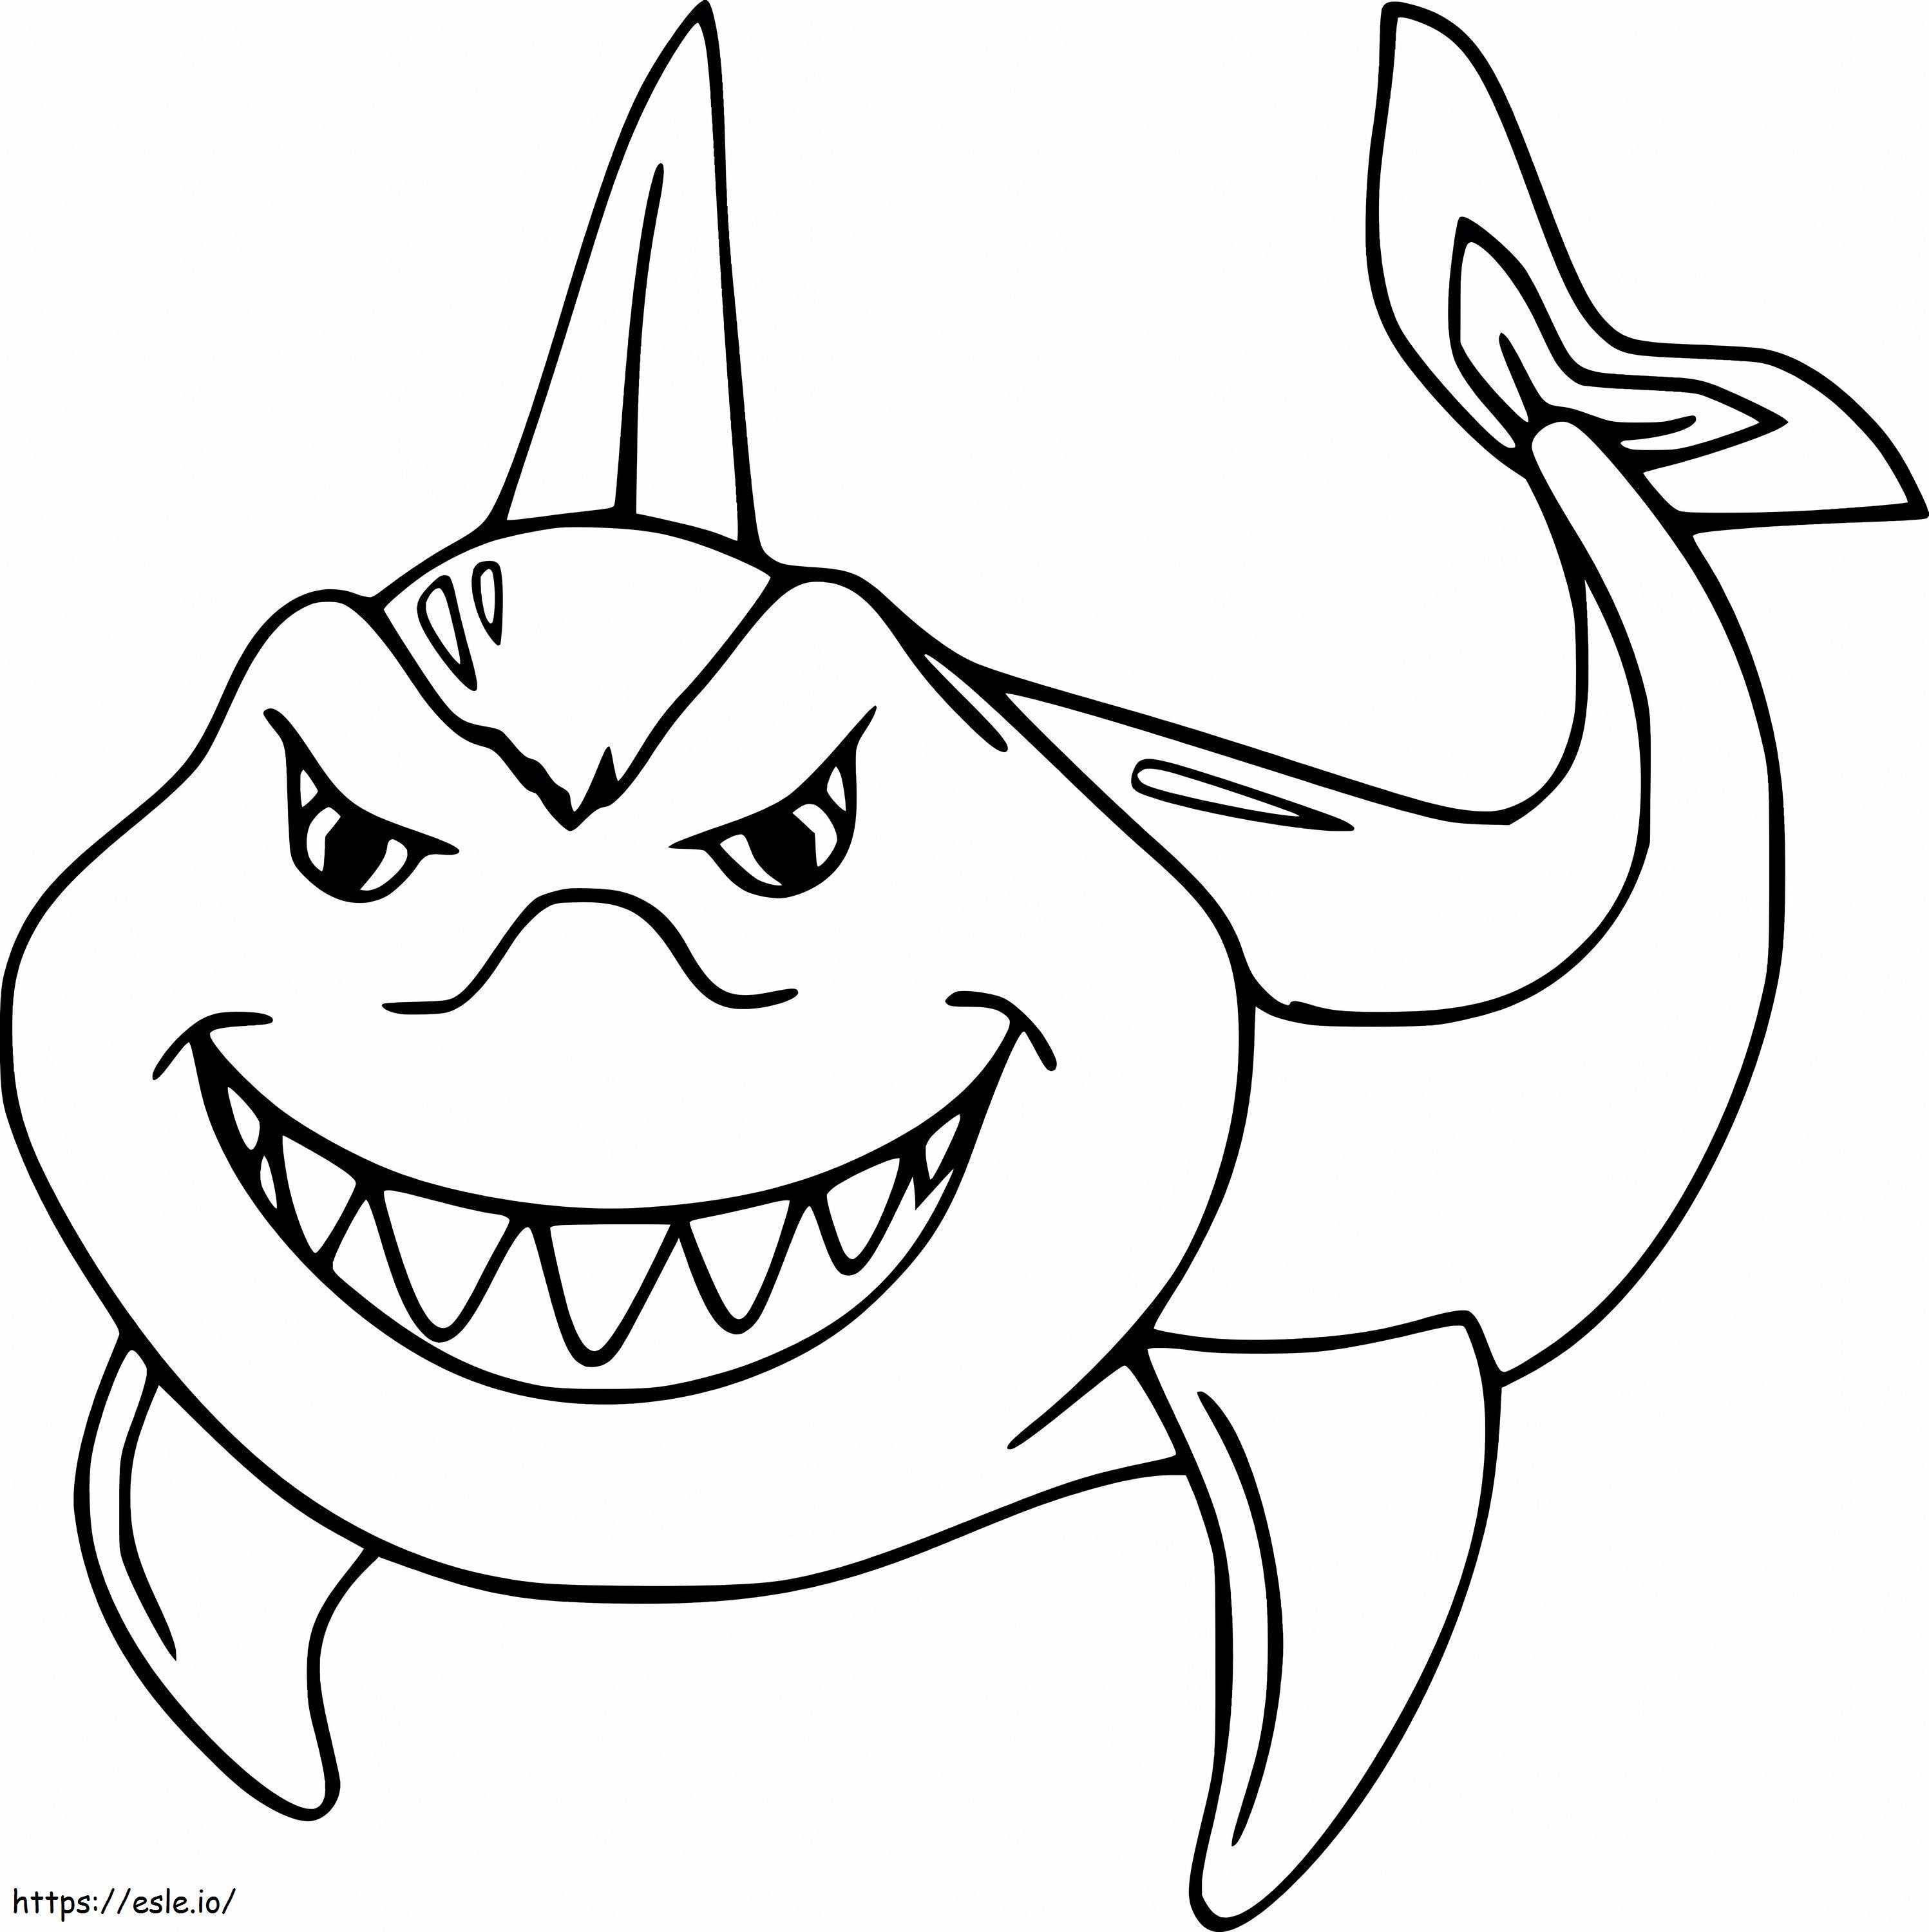 Tiburon Mako coloring page